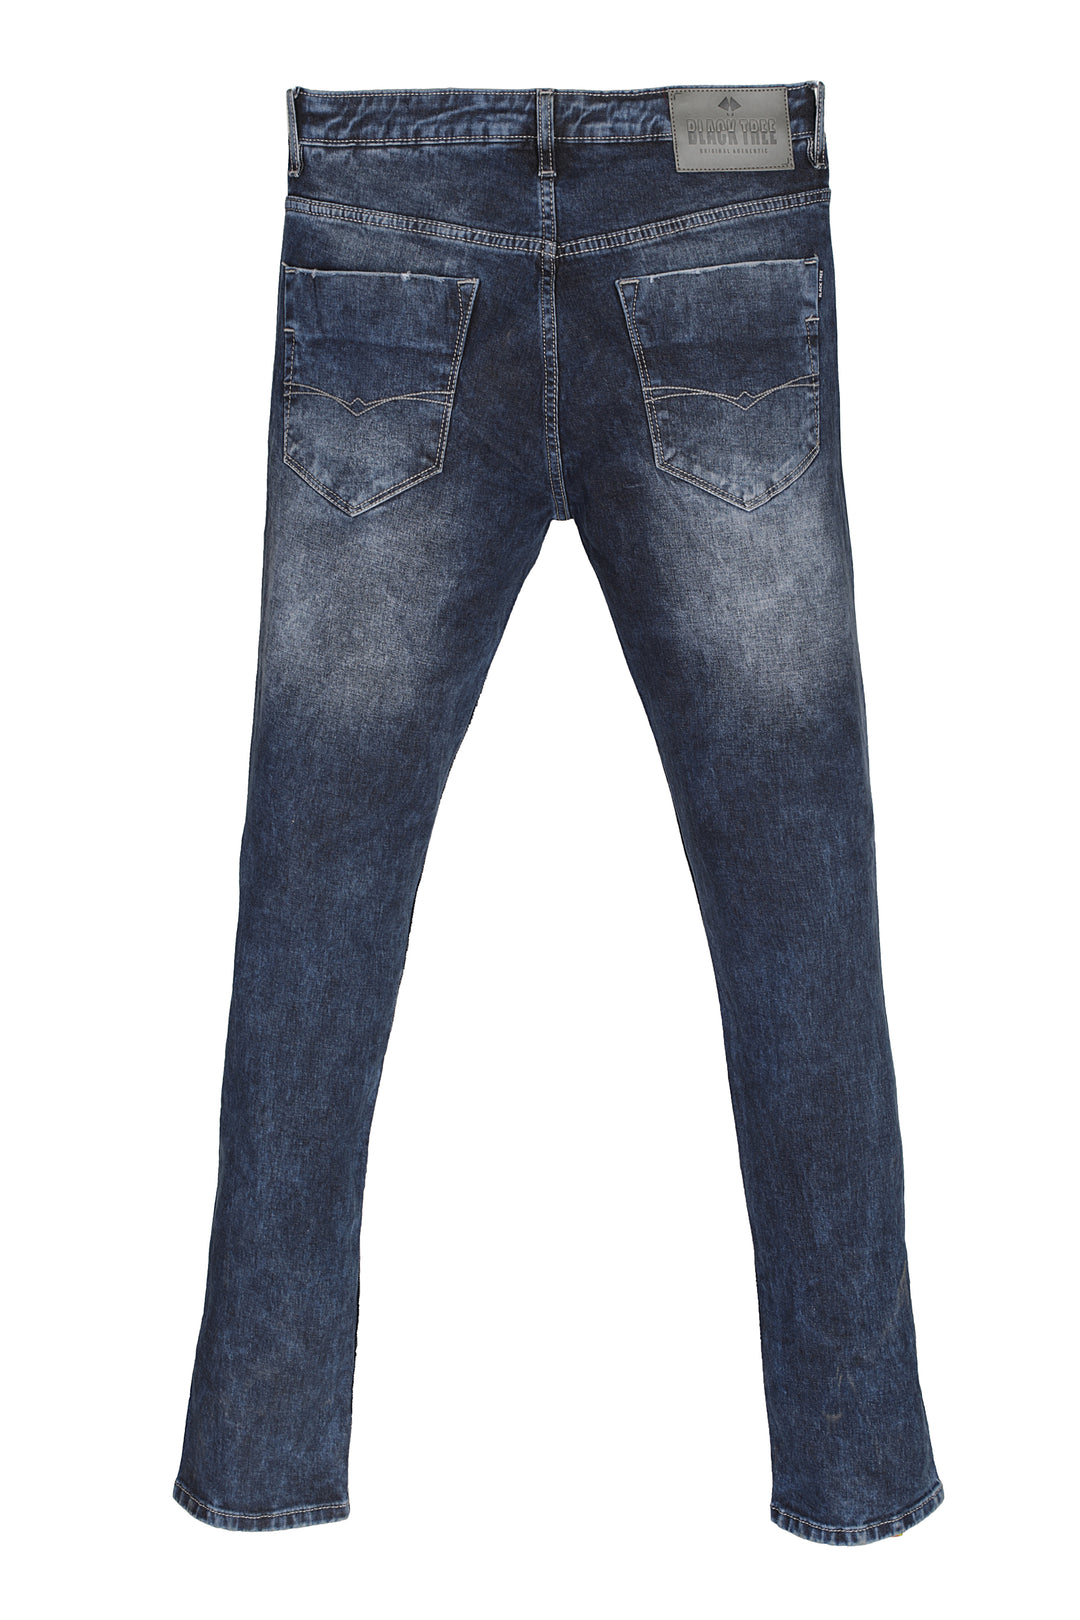 BlacK Tree Autumn Jeans slim fit Cut Light Blue Stretch Fashion Jeans BT003..